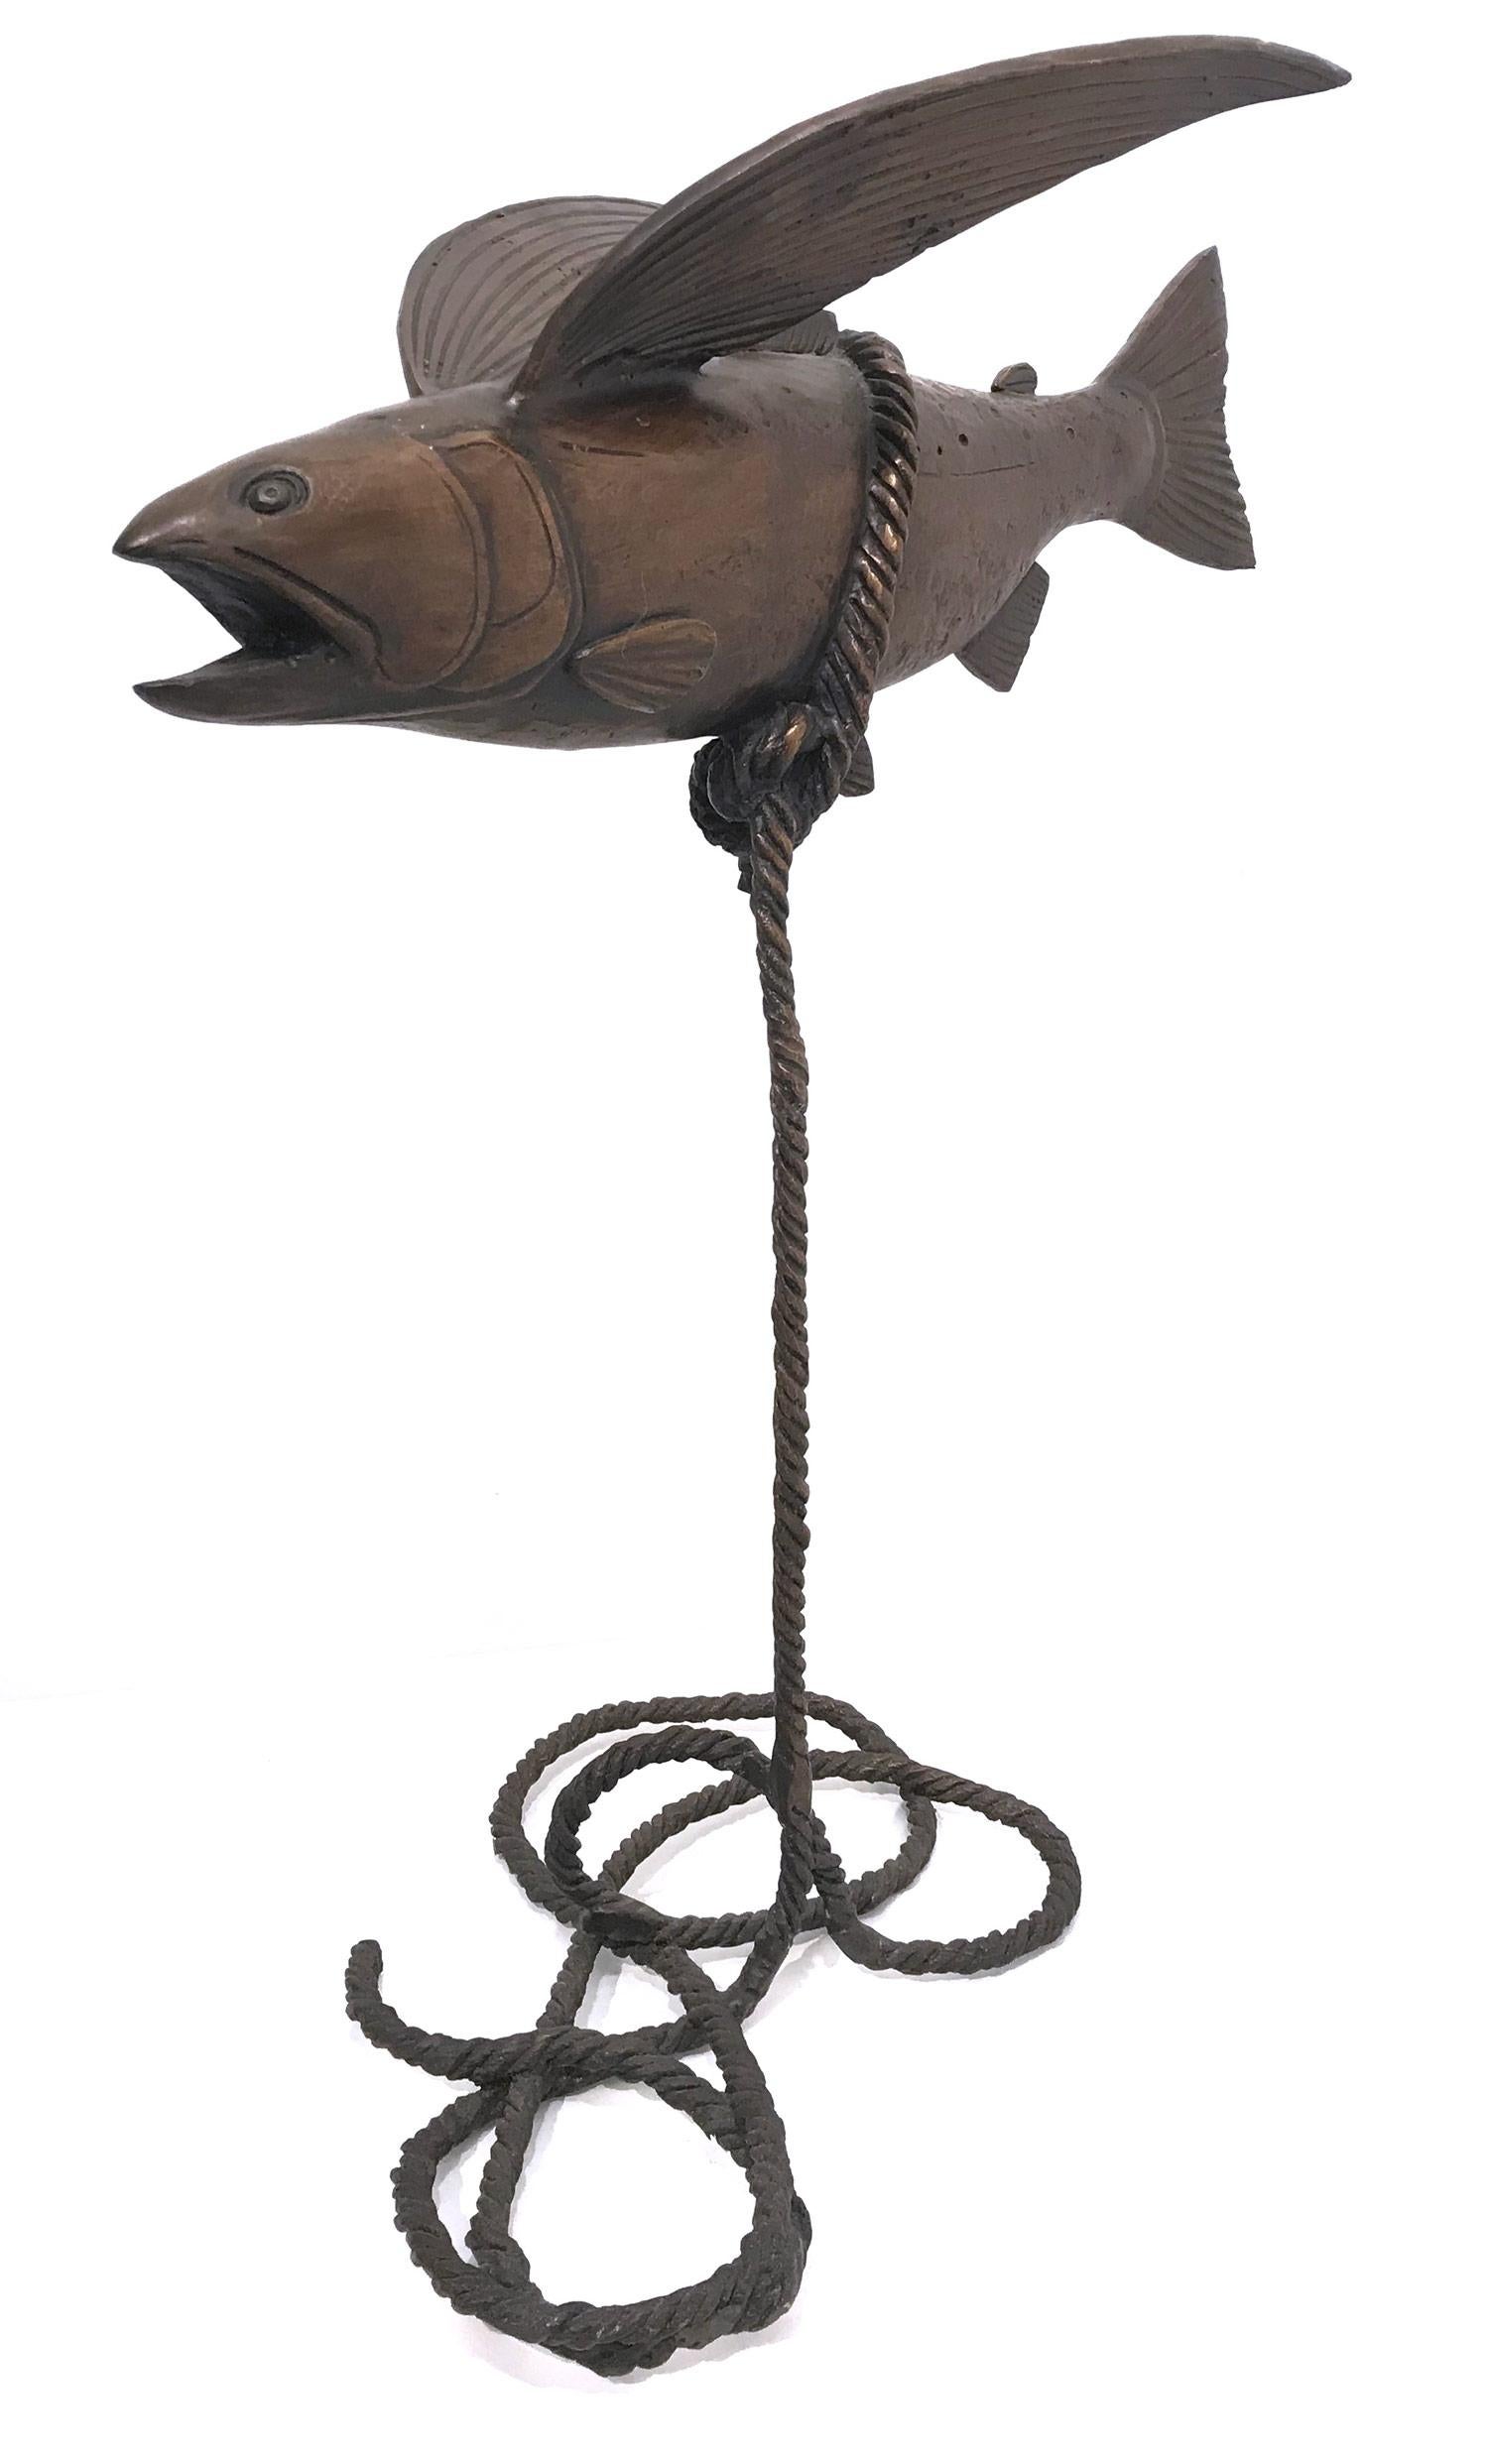 Gillie and Marc Schattner Figurative Sculpture - "Flying Fish" Bronze Wildlife Rope Suspended Sculpture with Deep Bronze Patina